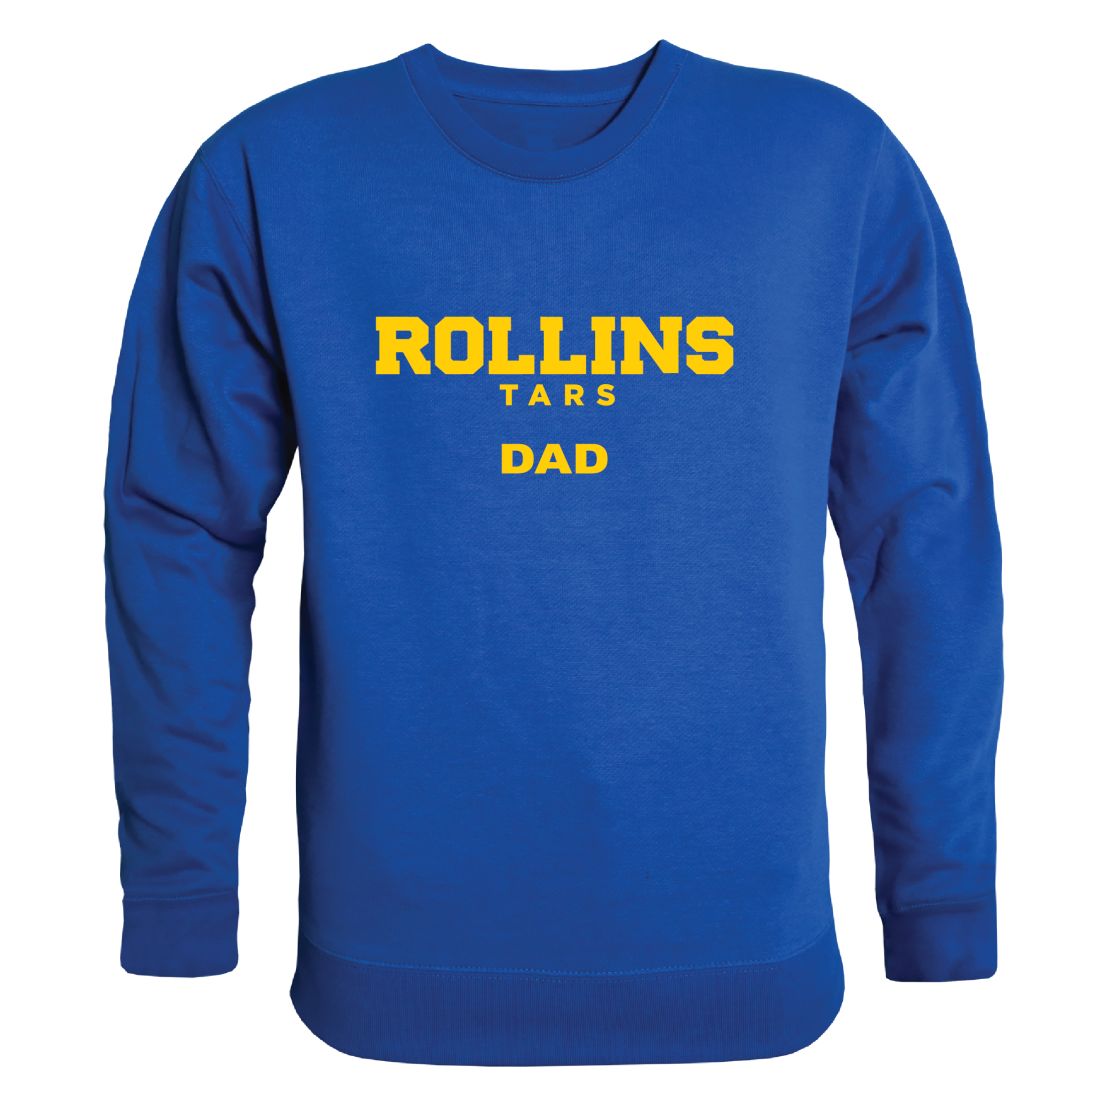 Rollins College Tars Dad Fleece Crewneck Pullover Sweatshirt